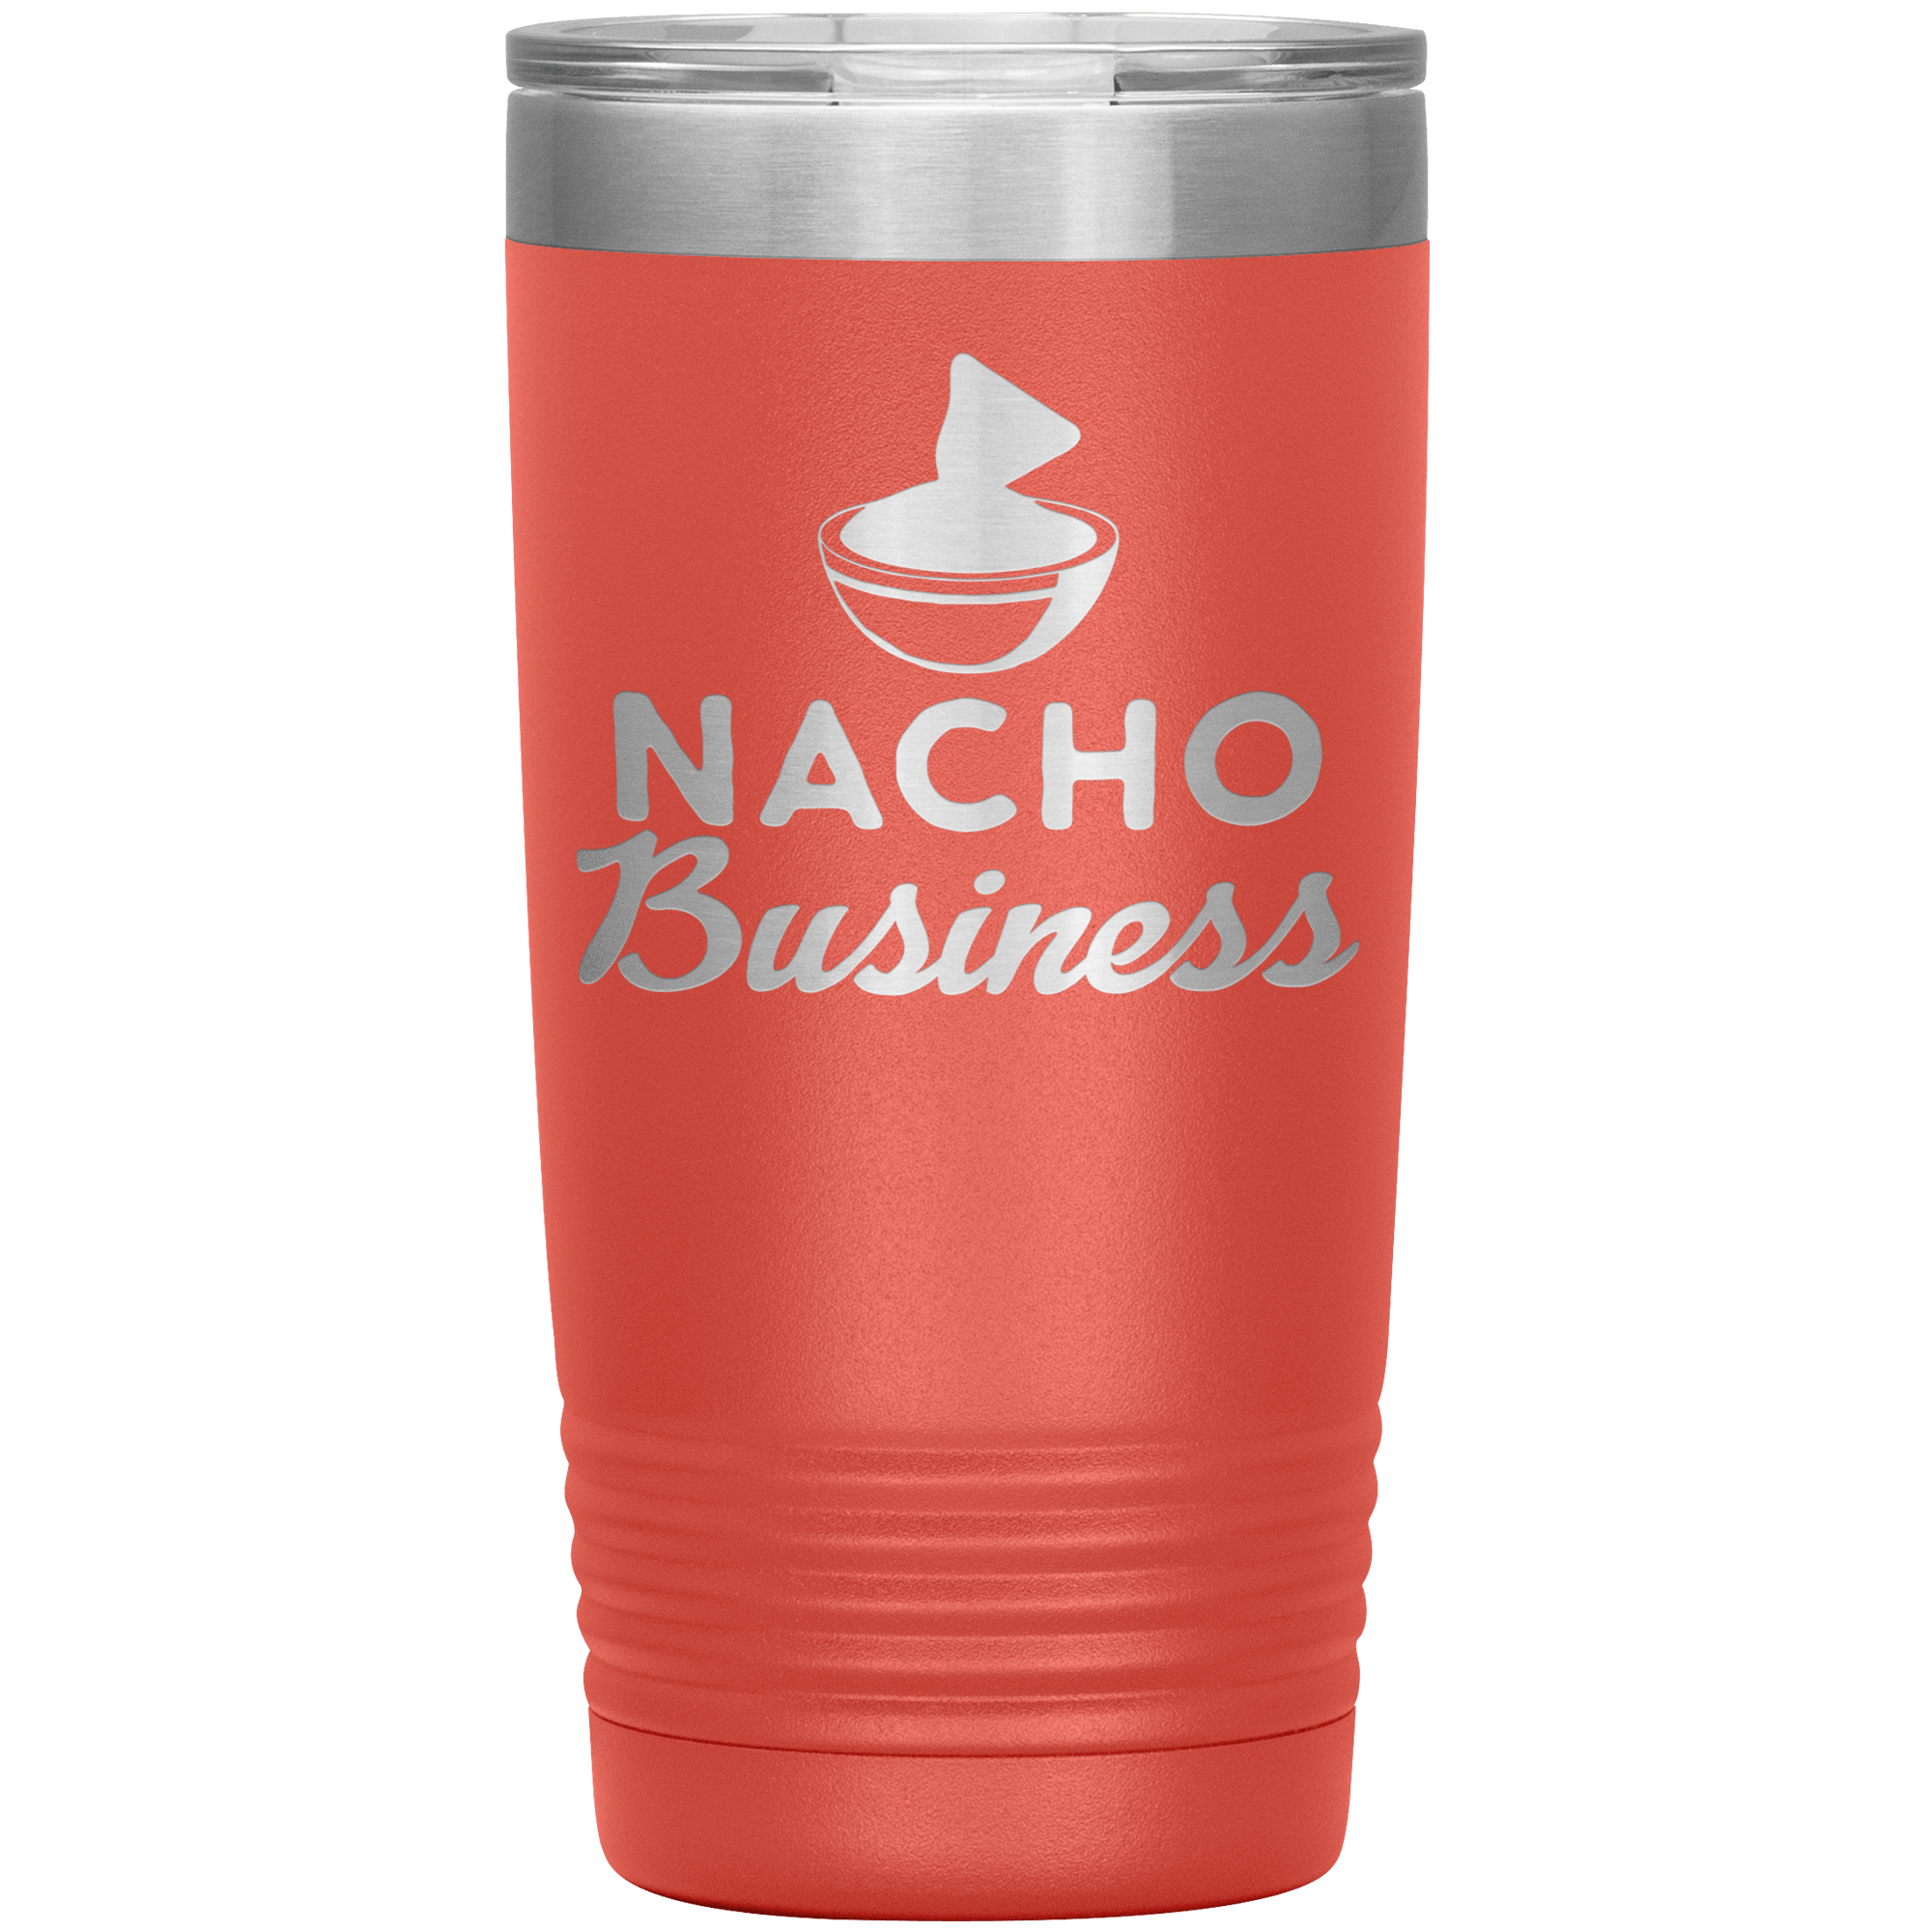 " NACHO BUSINESS " TUMBLER